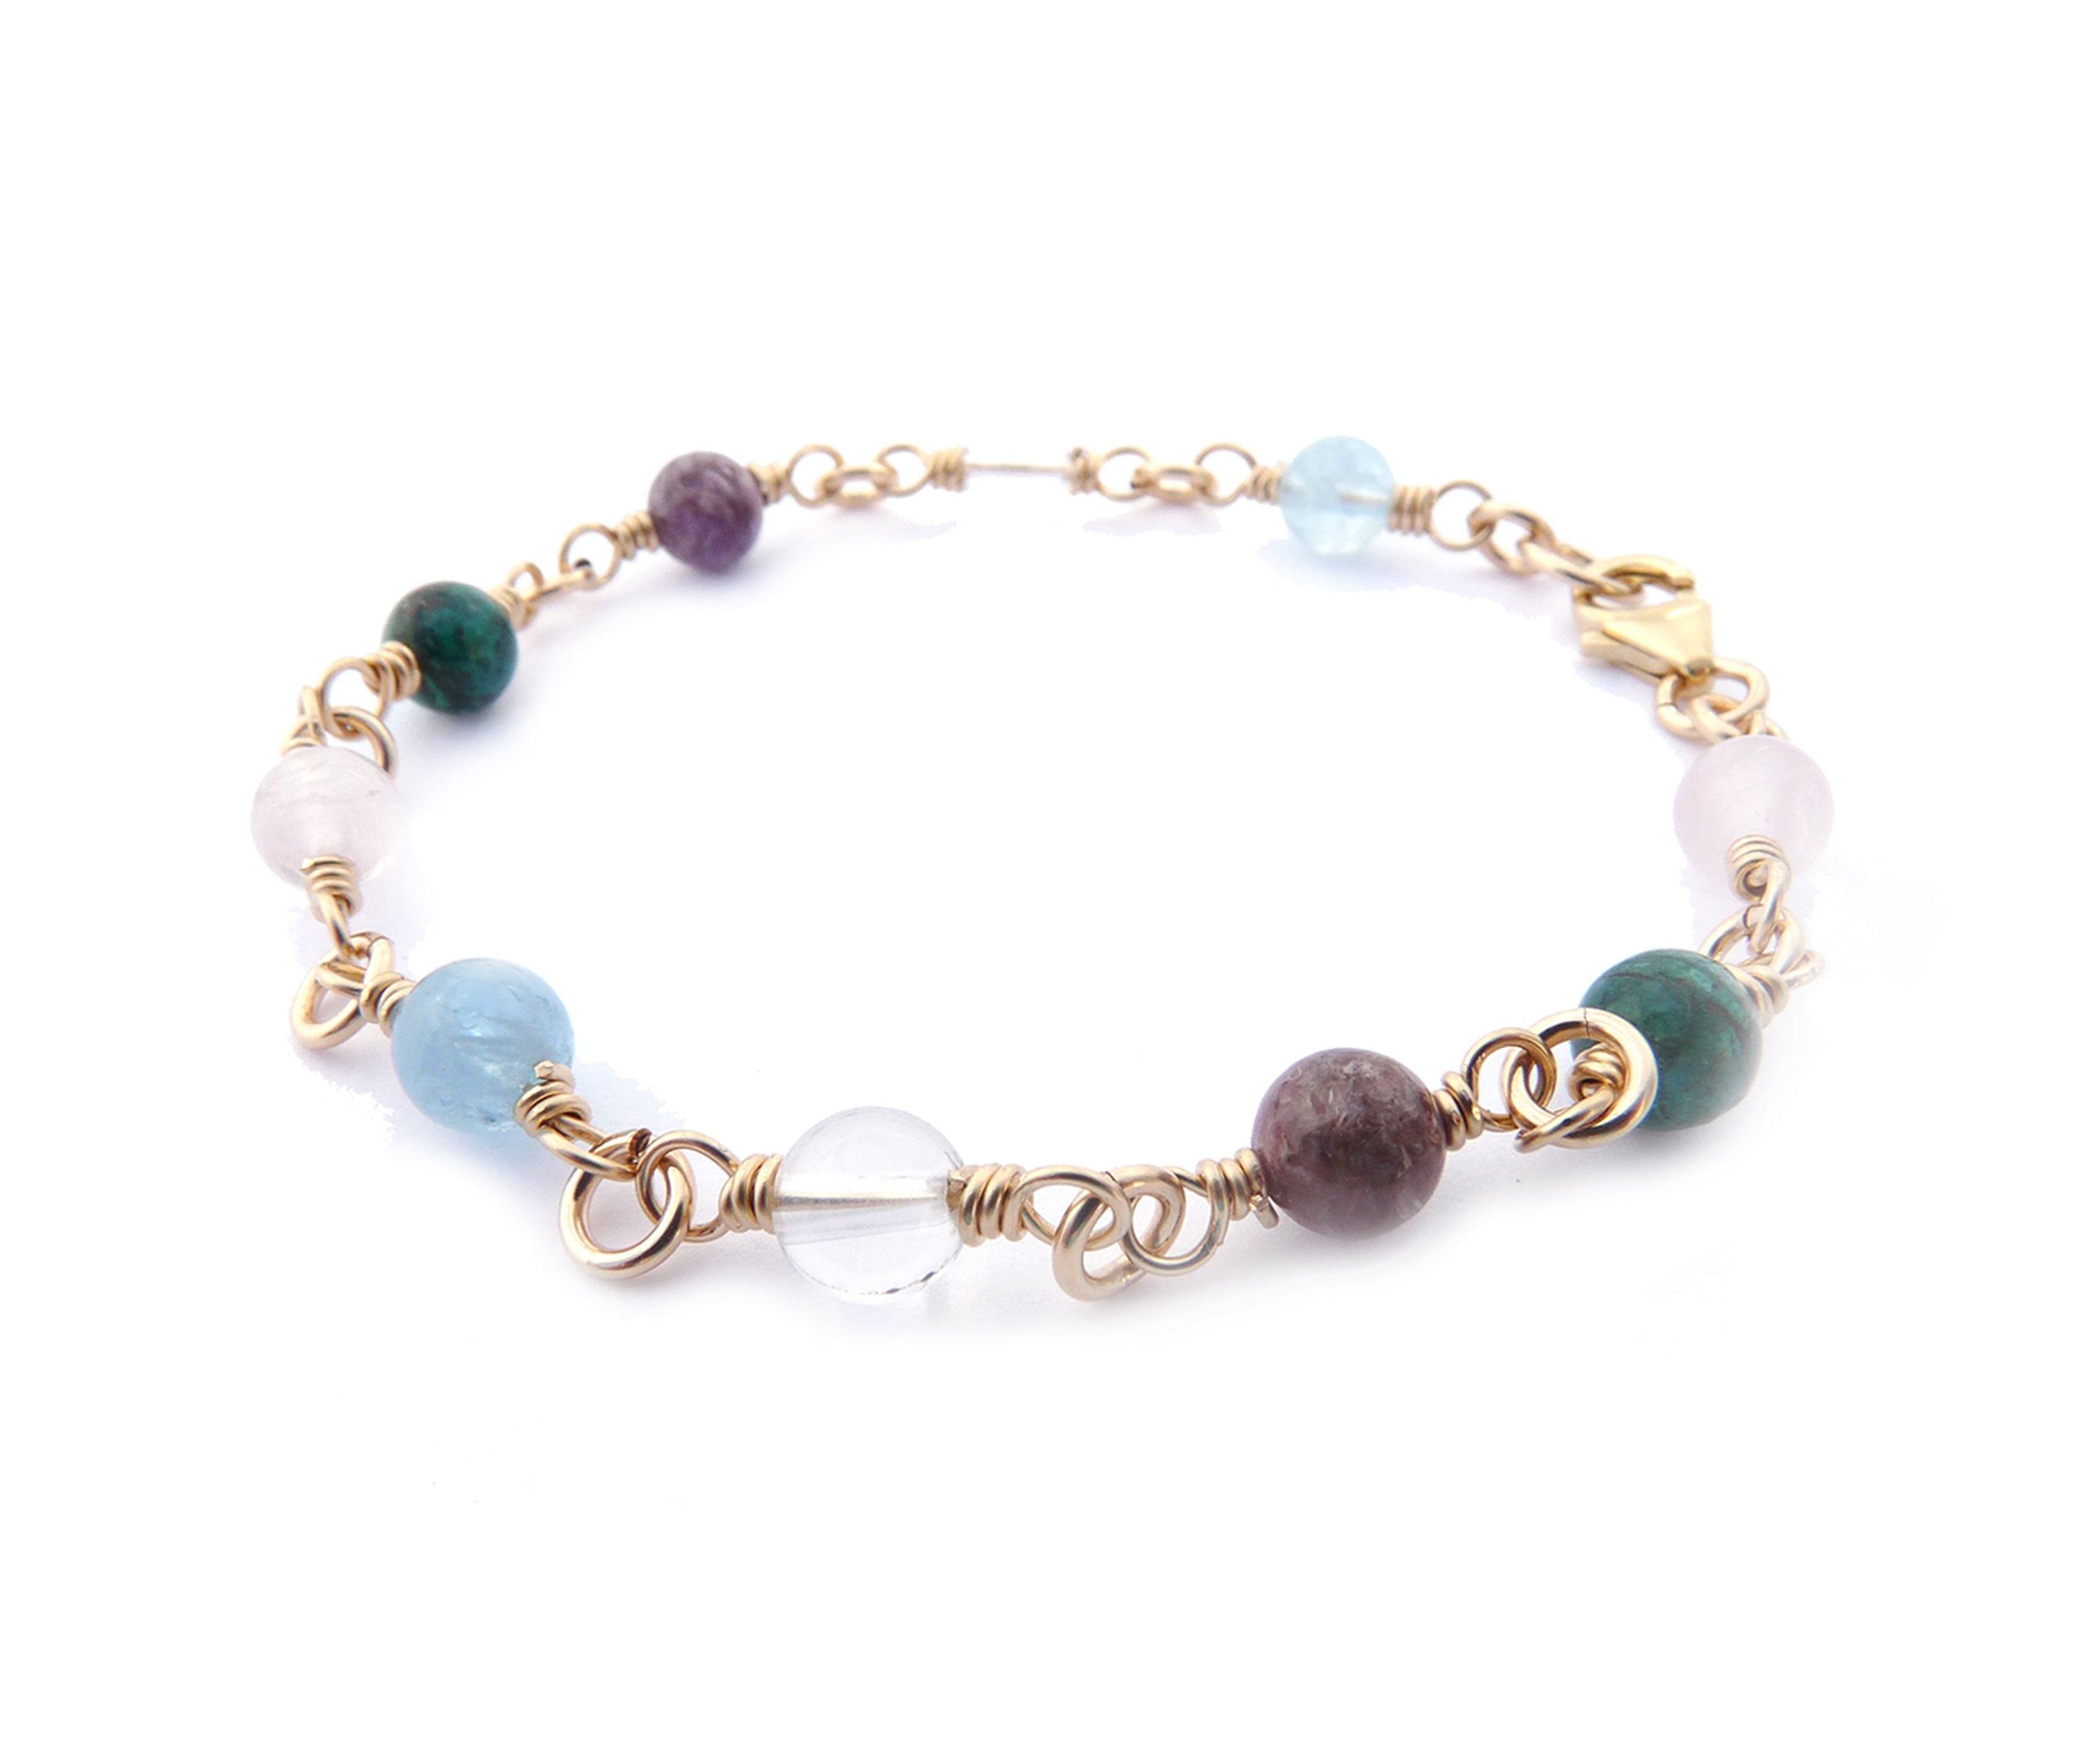 14K GF Gold Serenity Prayer Jewelry, Mindful Positive Affirmation Spiritual Gifts Crystal Healing Bracelet